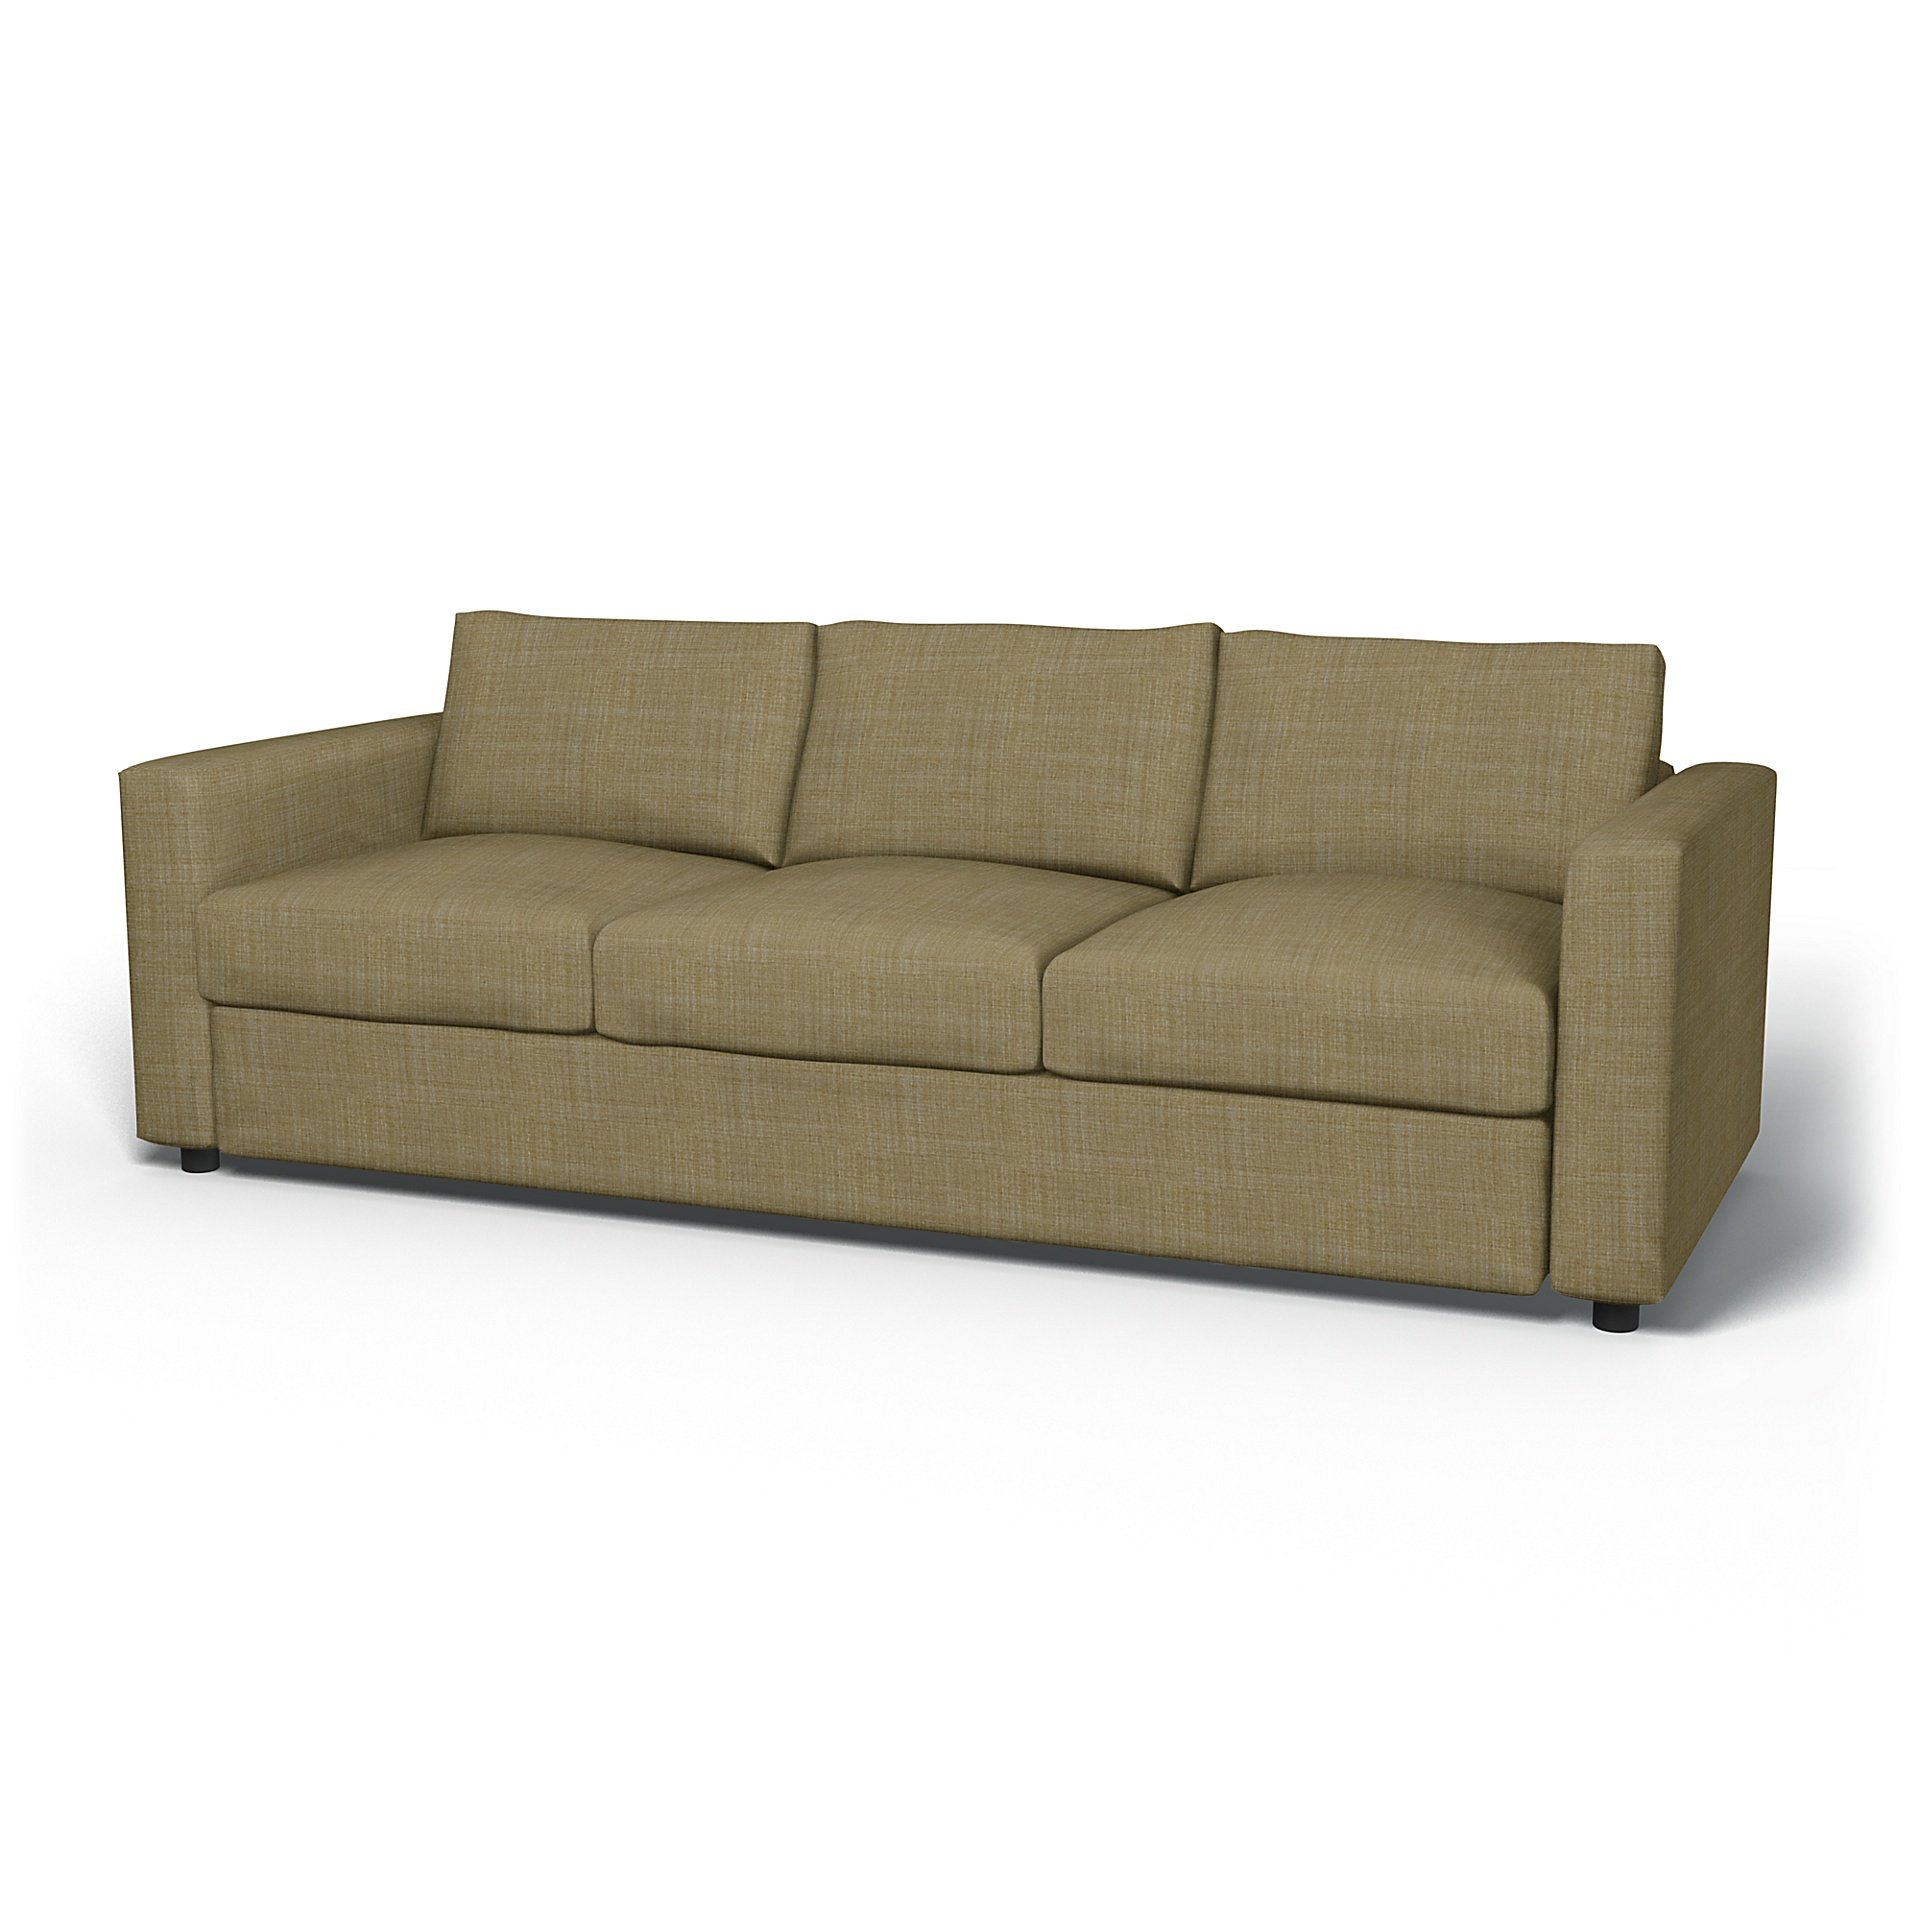 IKEA - Vimle 3 Seater Sofa Cover, Dusty Yellow, Boucle & Texture - Bemz